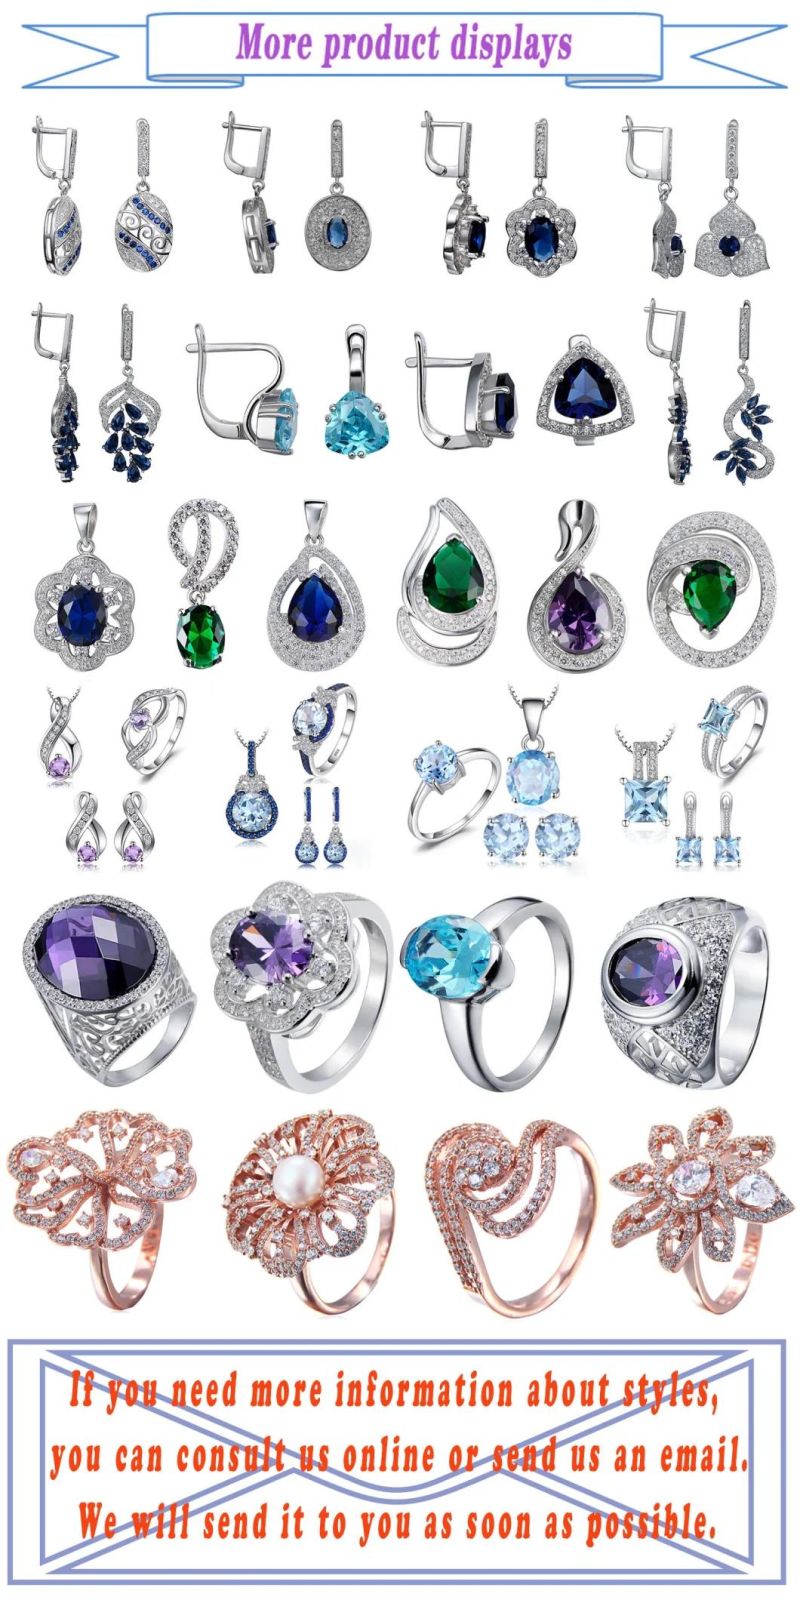 925 Sterling Silver Pendants Necklace Love Heart Unicorn Pendant Fashion Jewelry Wholesale